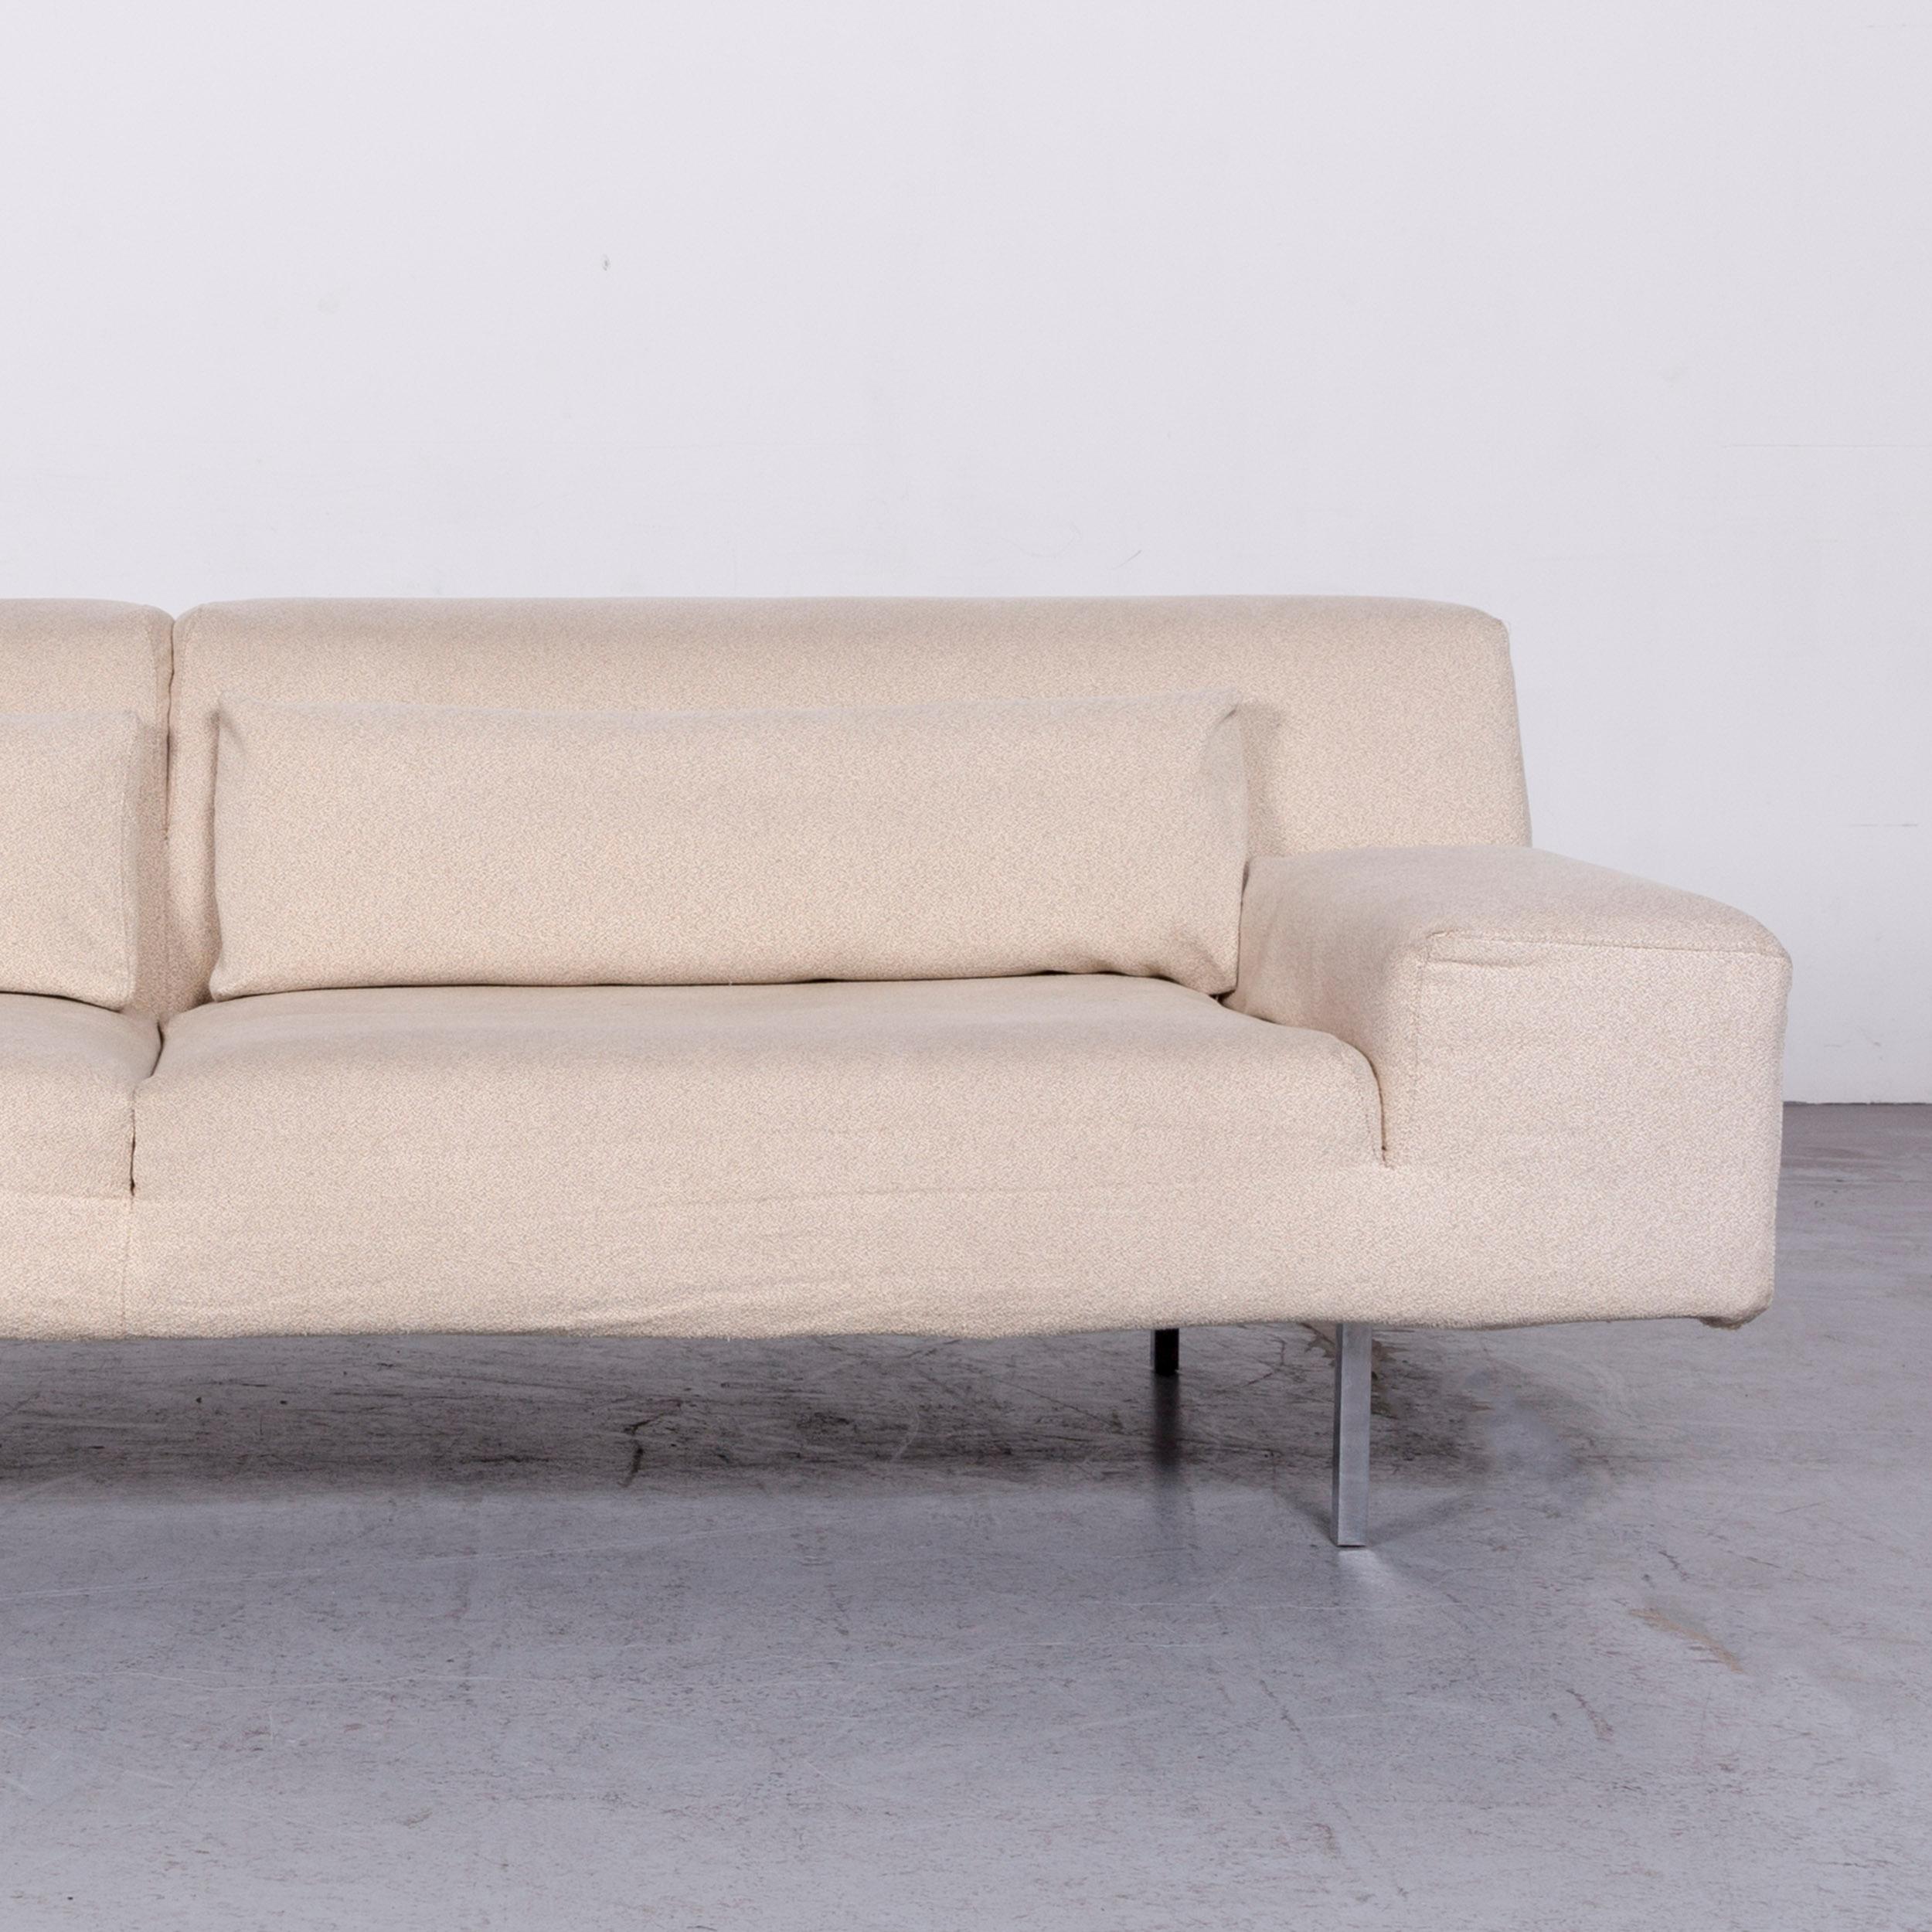 German Molteni Designer Fabric Sofa Creme Three-Seat Couch  For Sale